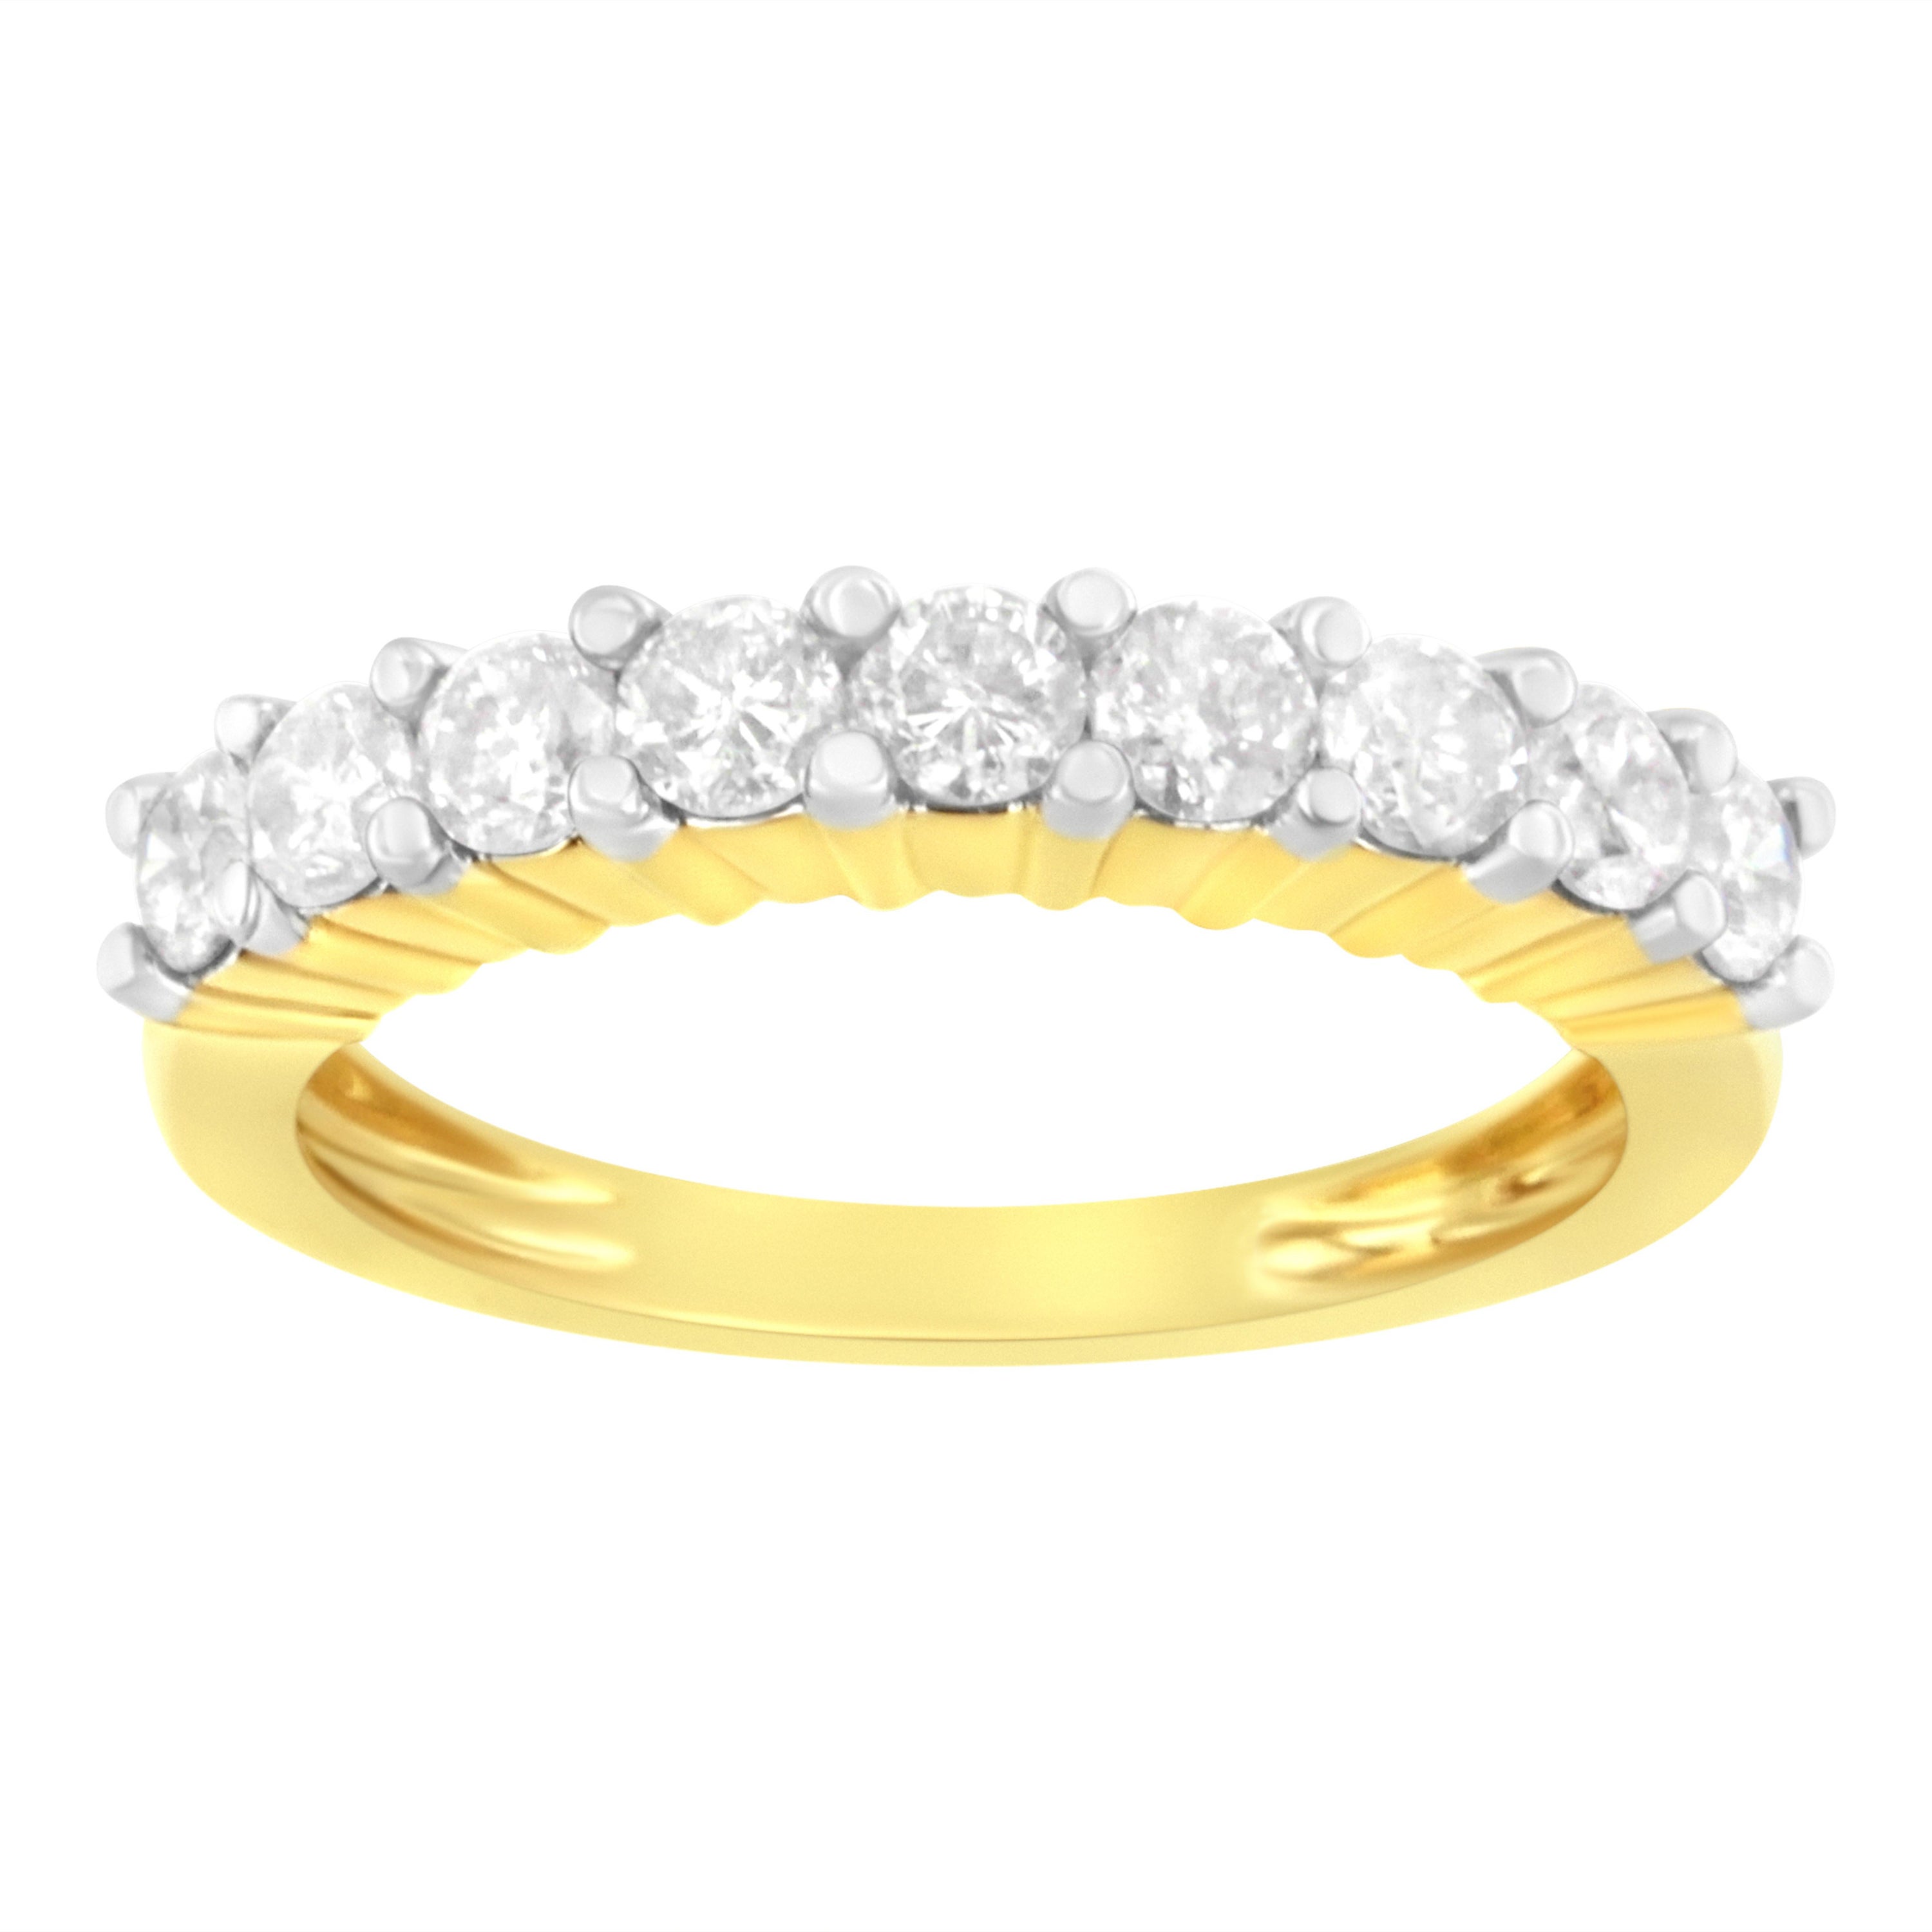 IGI Certified 10KT Yellow Gold 1 cttw Diamond Band Ring